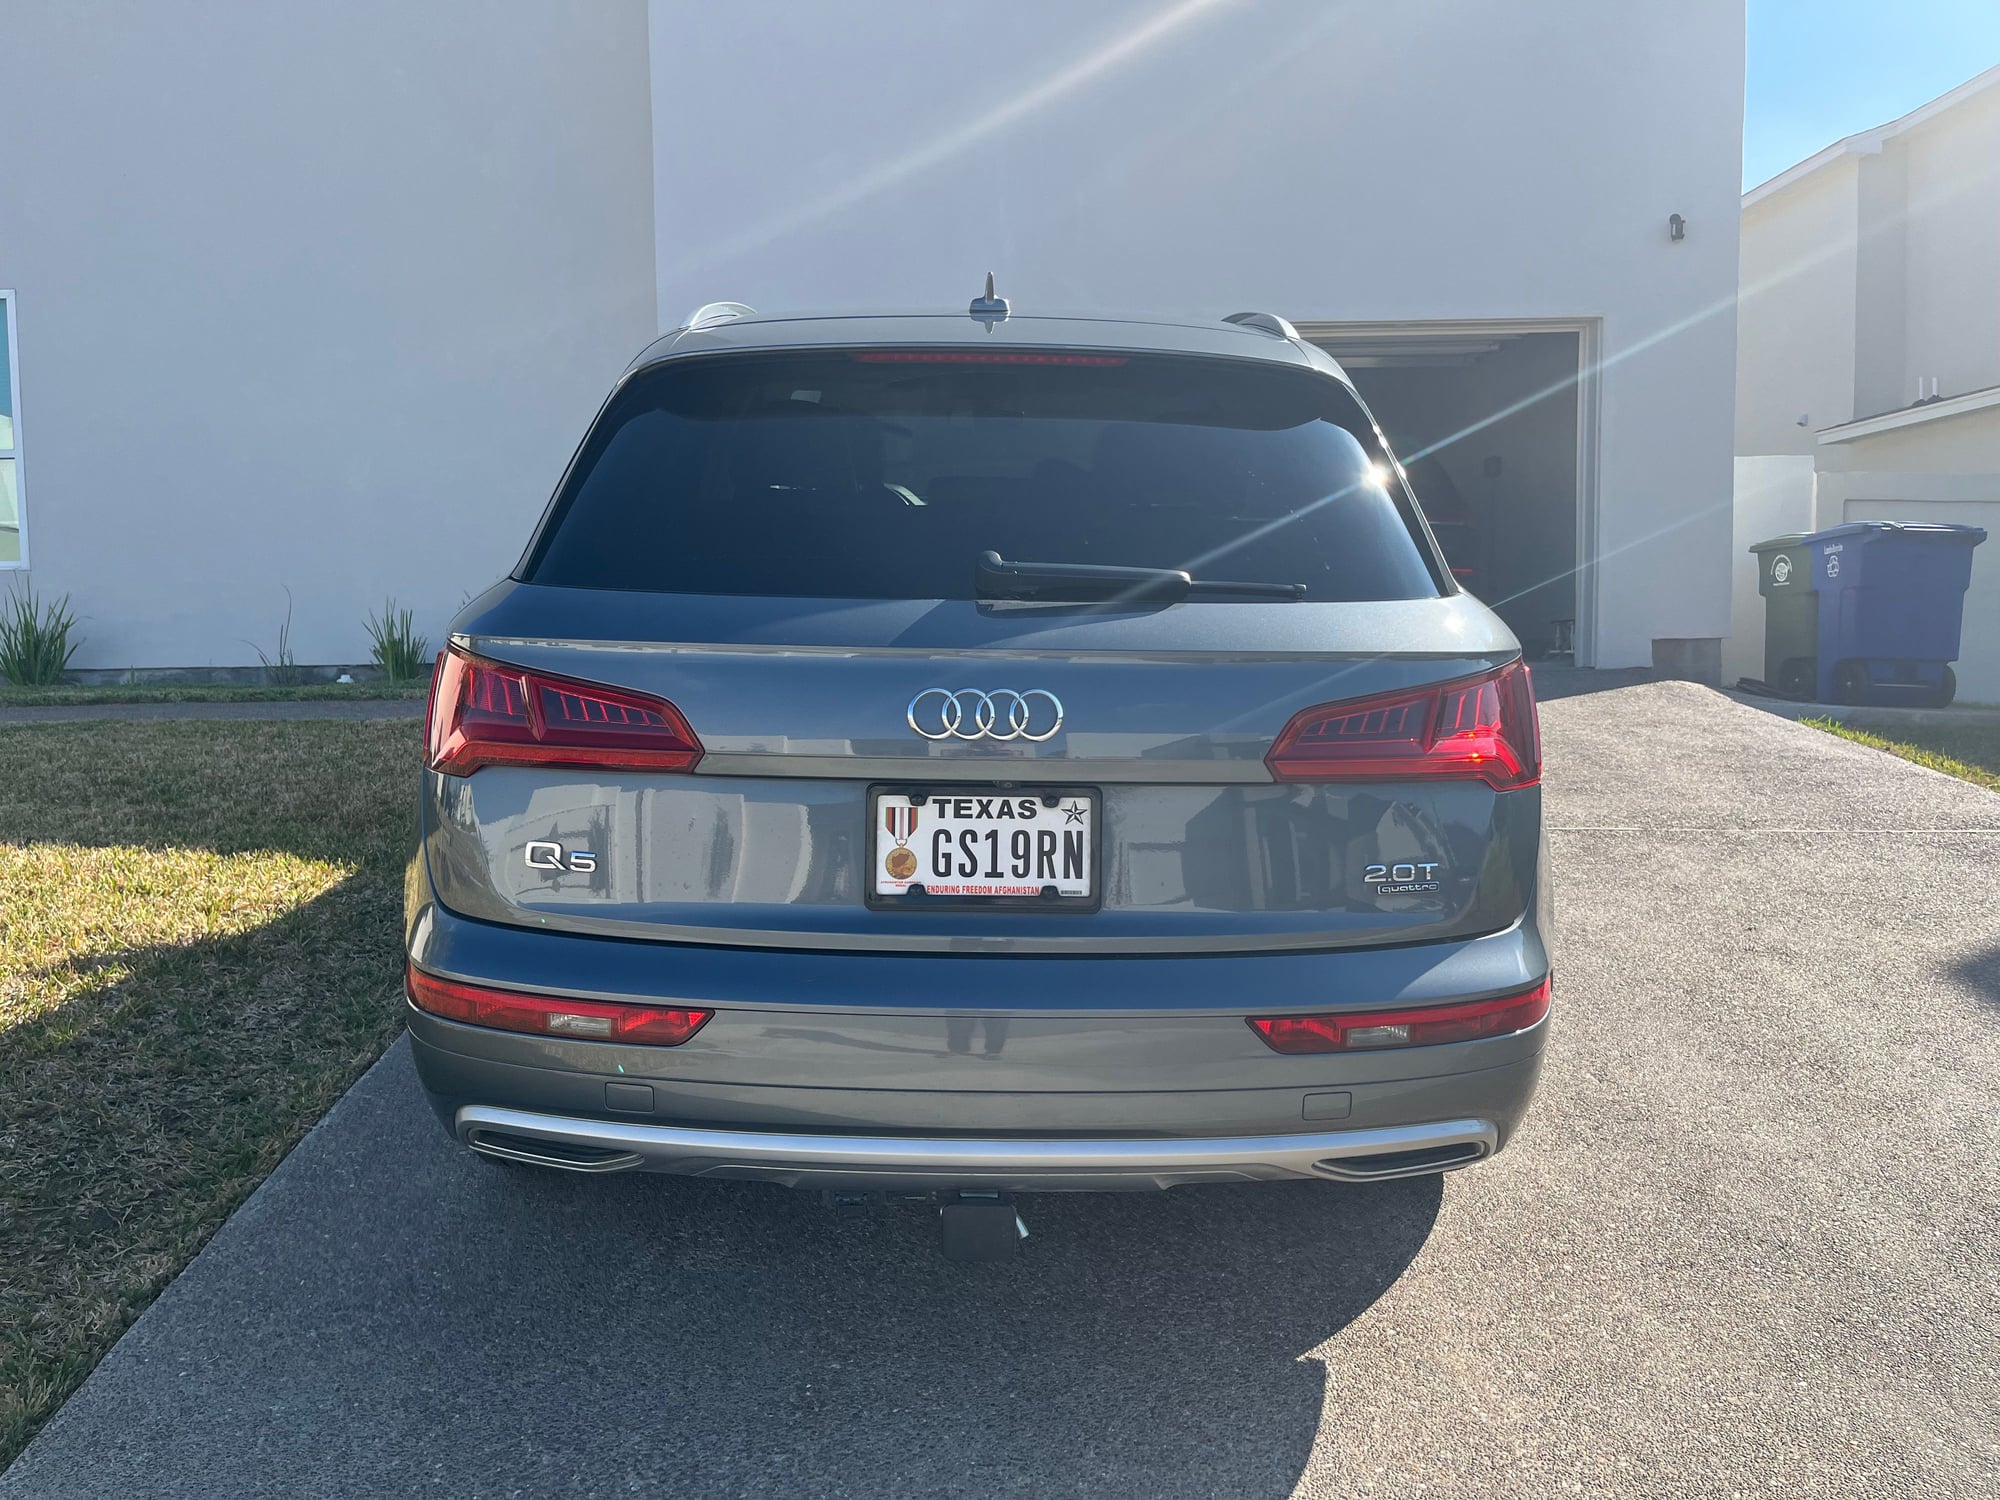 2018 Audi Q5 - CPO 2018 Audi Q5 w/ Tow Pkg - Used - VIN WA1ANAFY6J2040480 - 79,100 Miles - 4 cyl - 4WD - Automatic - SUV - Gray - Laredo, TX TX, United States